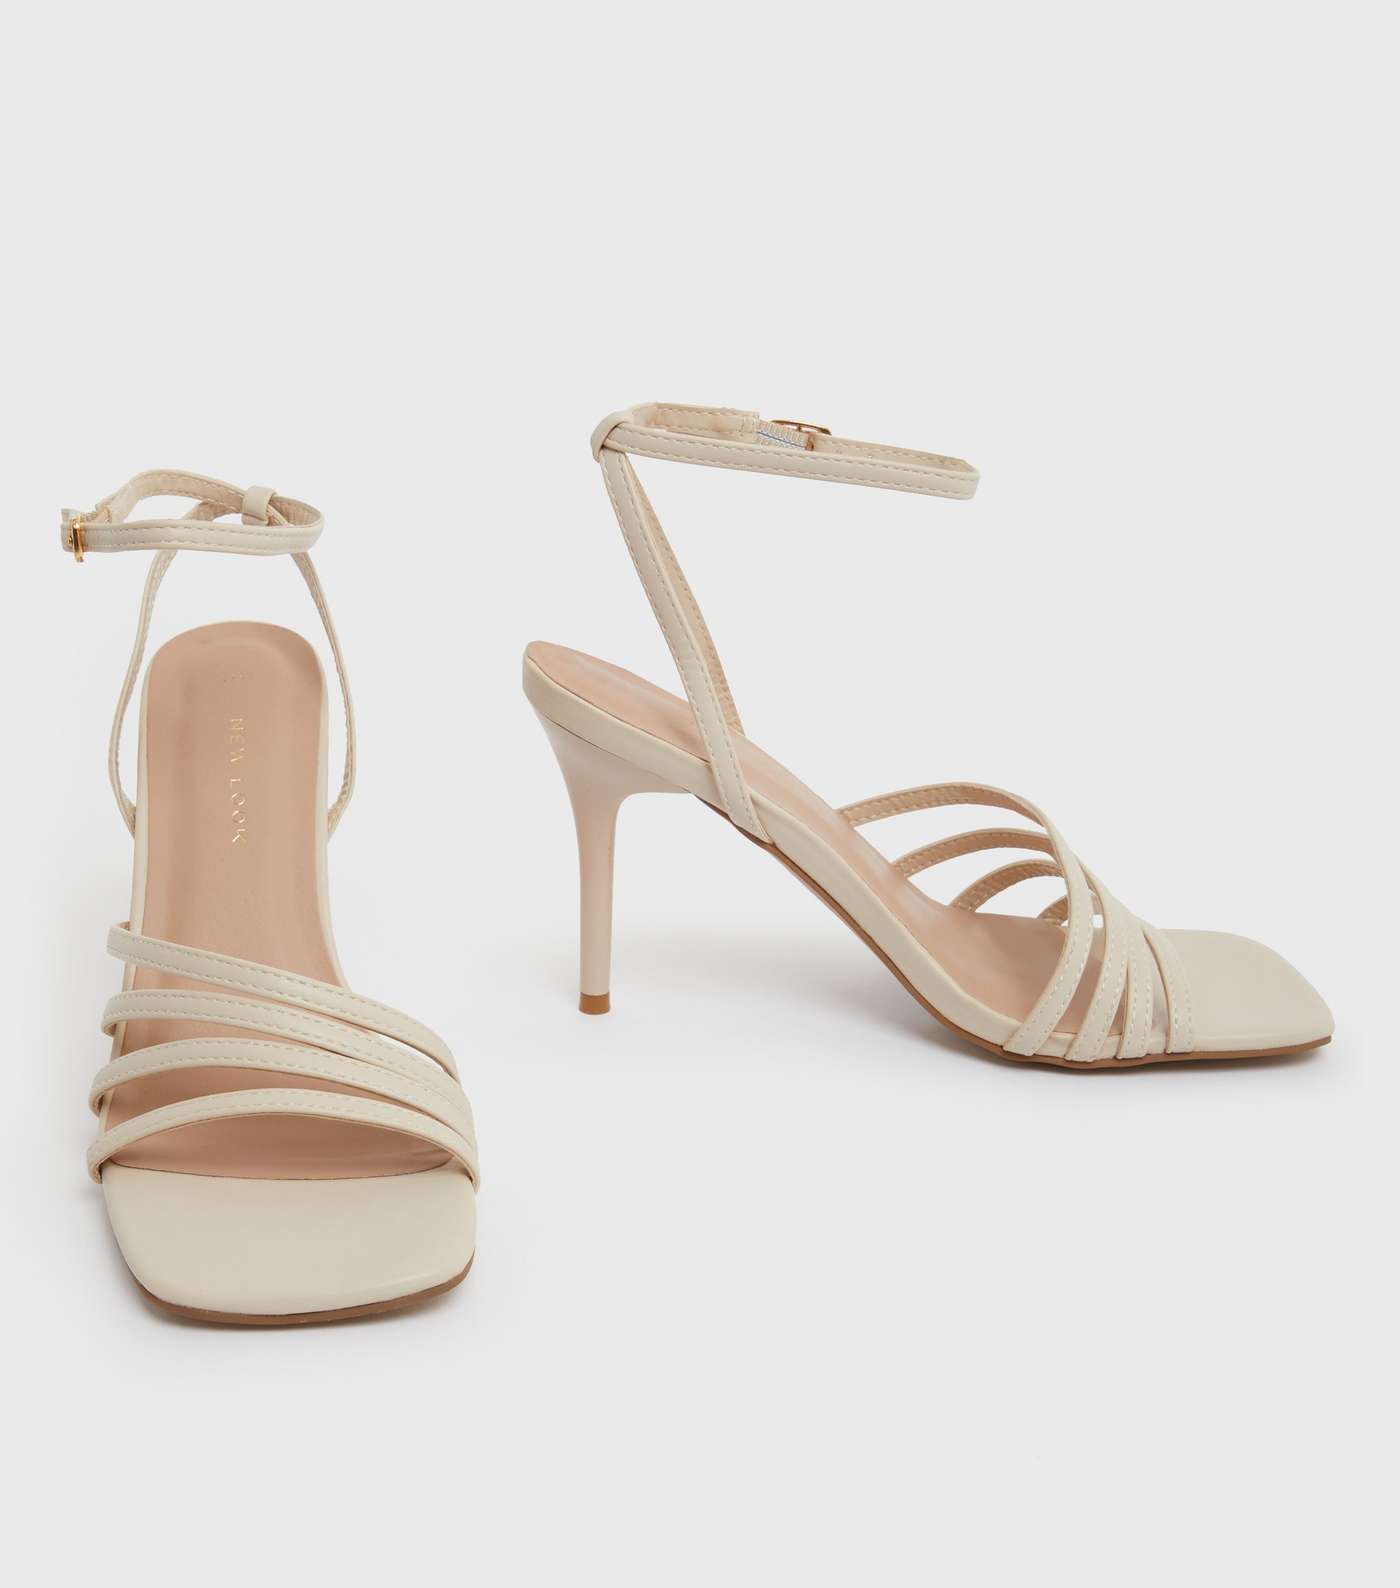 Off White Strappy Stiletto Heel Sandals Image 3